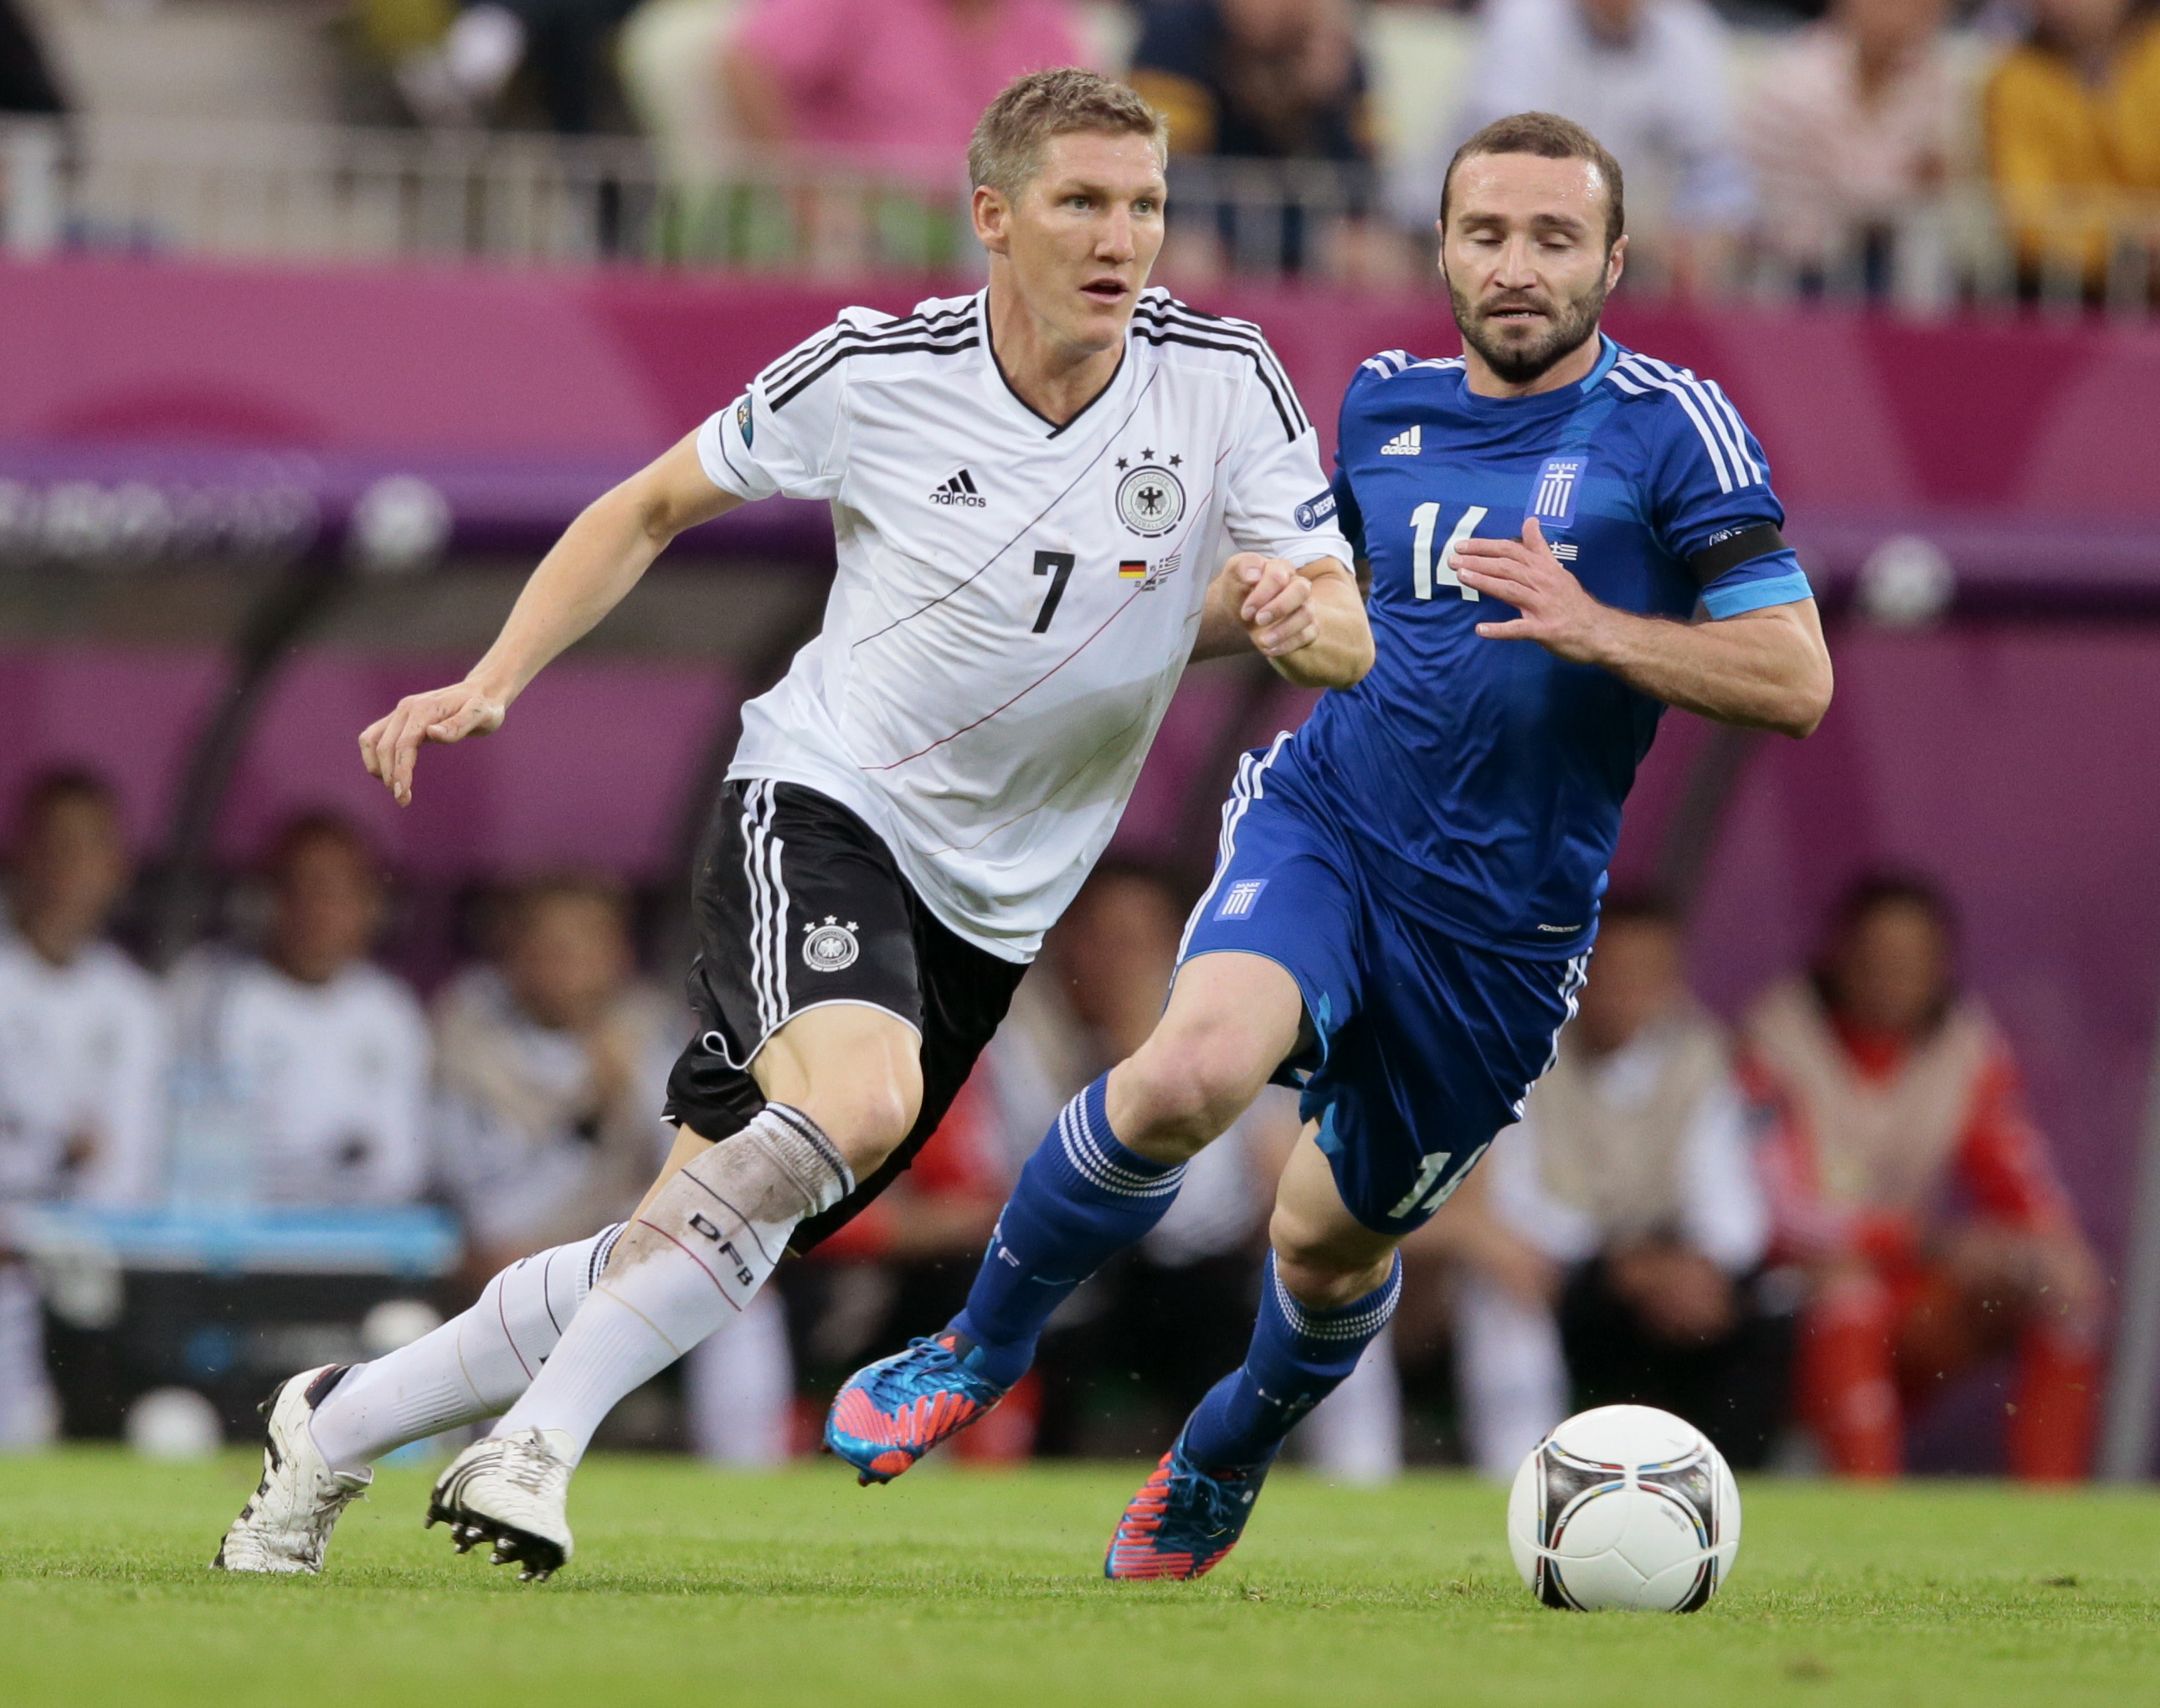 Fotboll, Tyskland, Fotbolls-EM, EM, Bastian Schweinsteiger